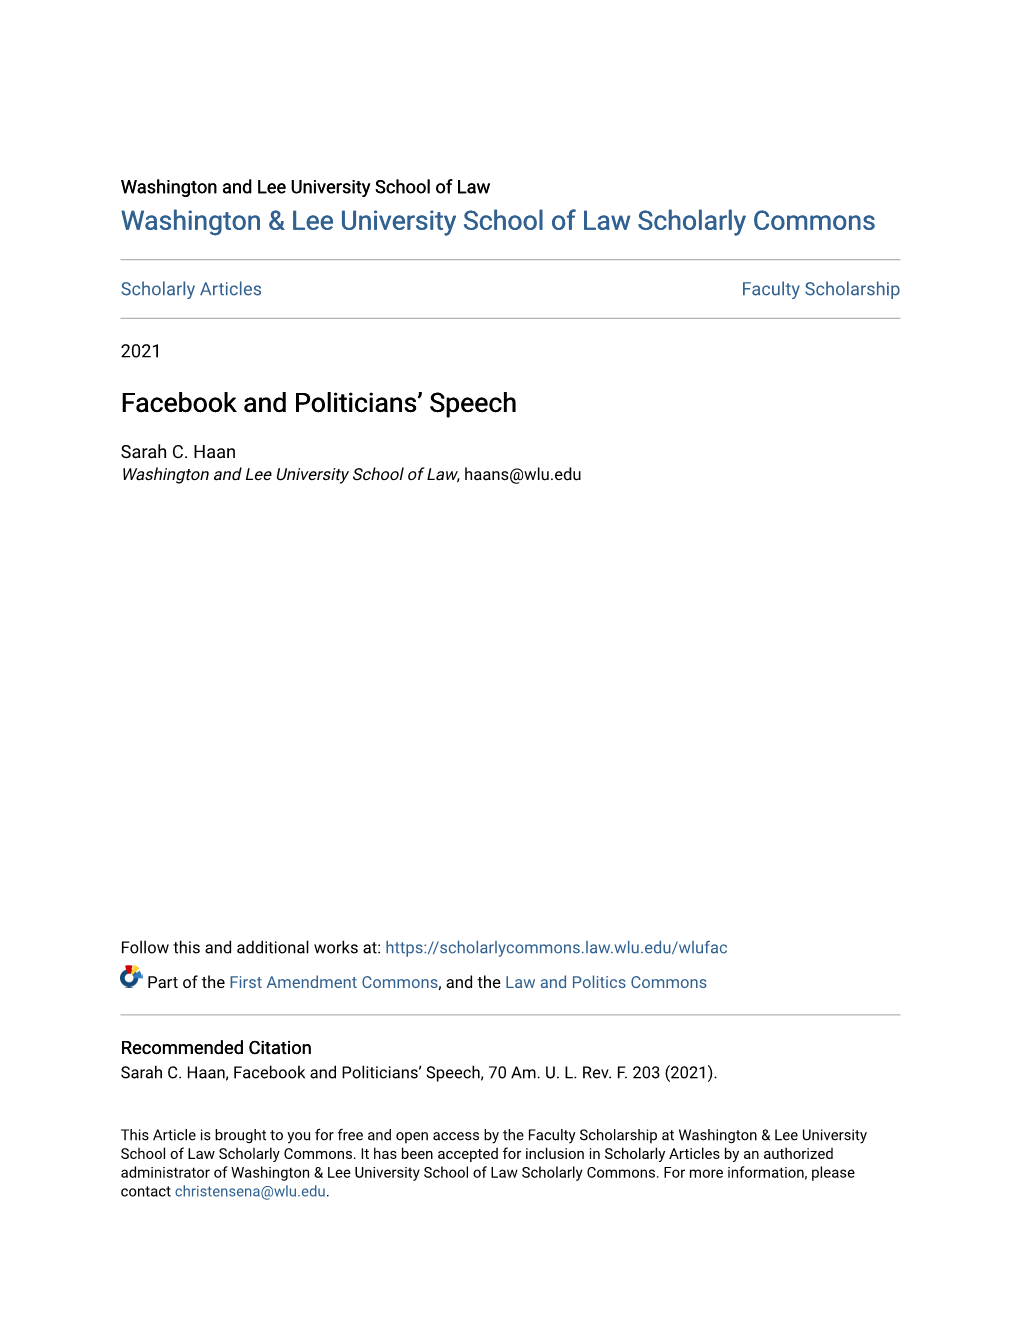 Facebook and Politicians' Speech